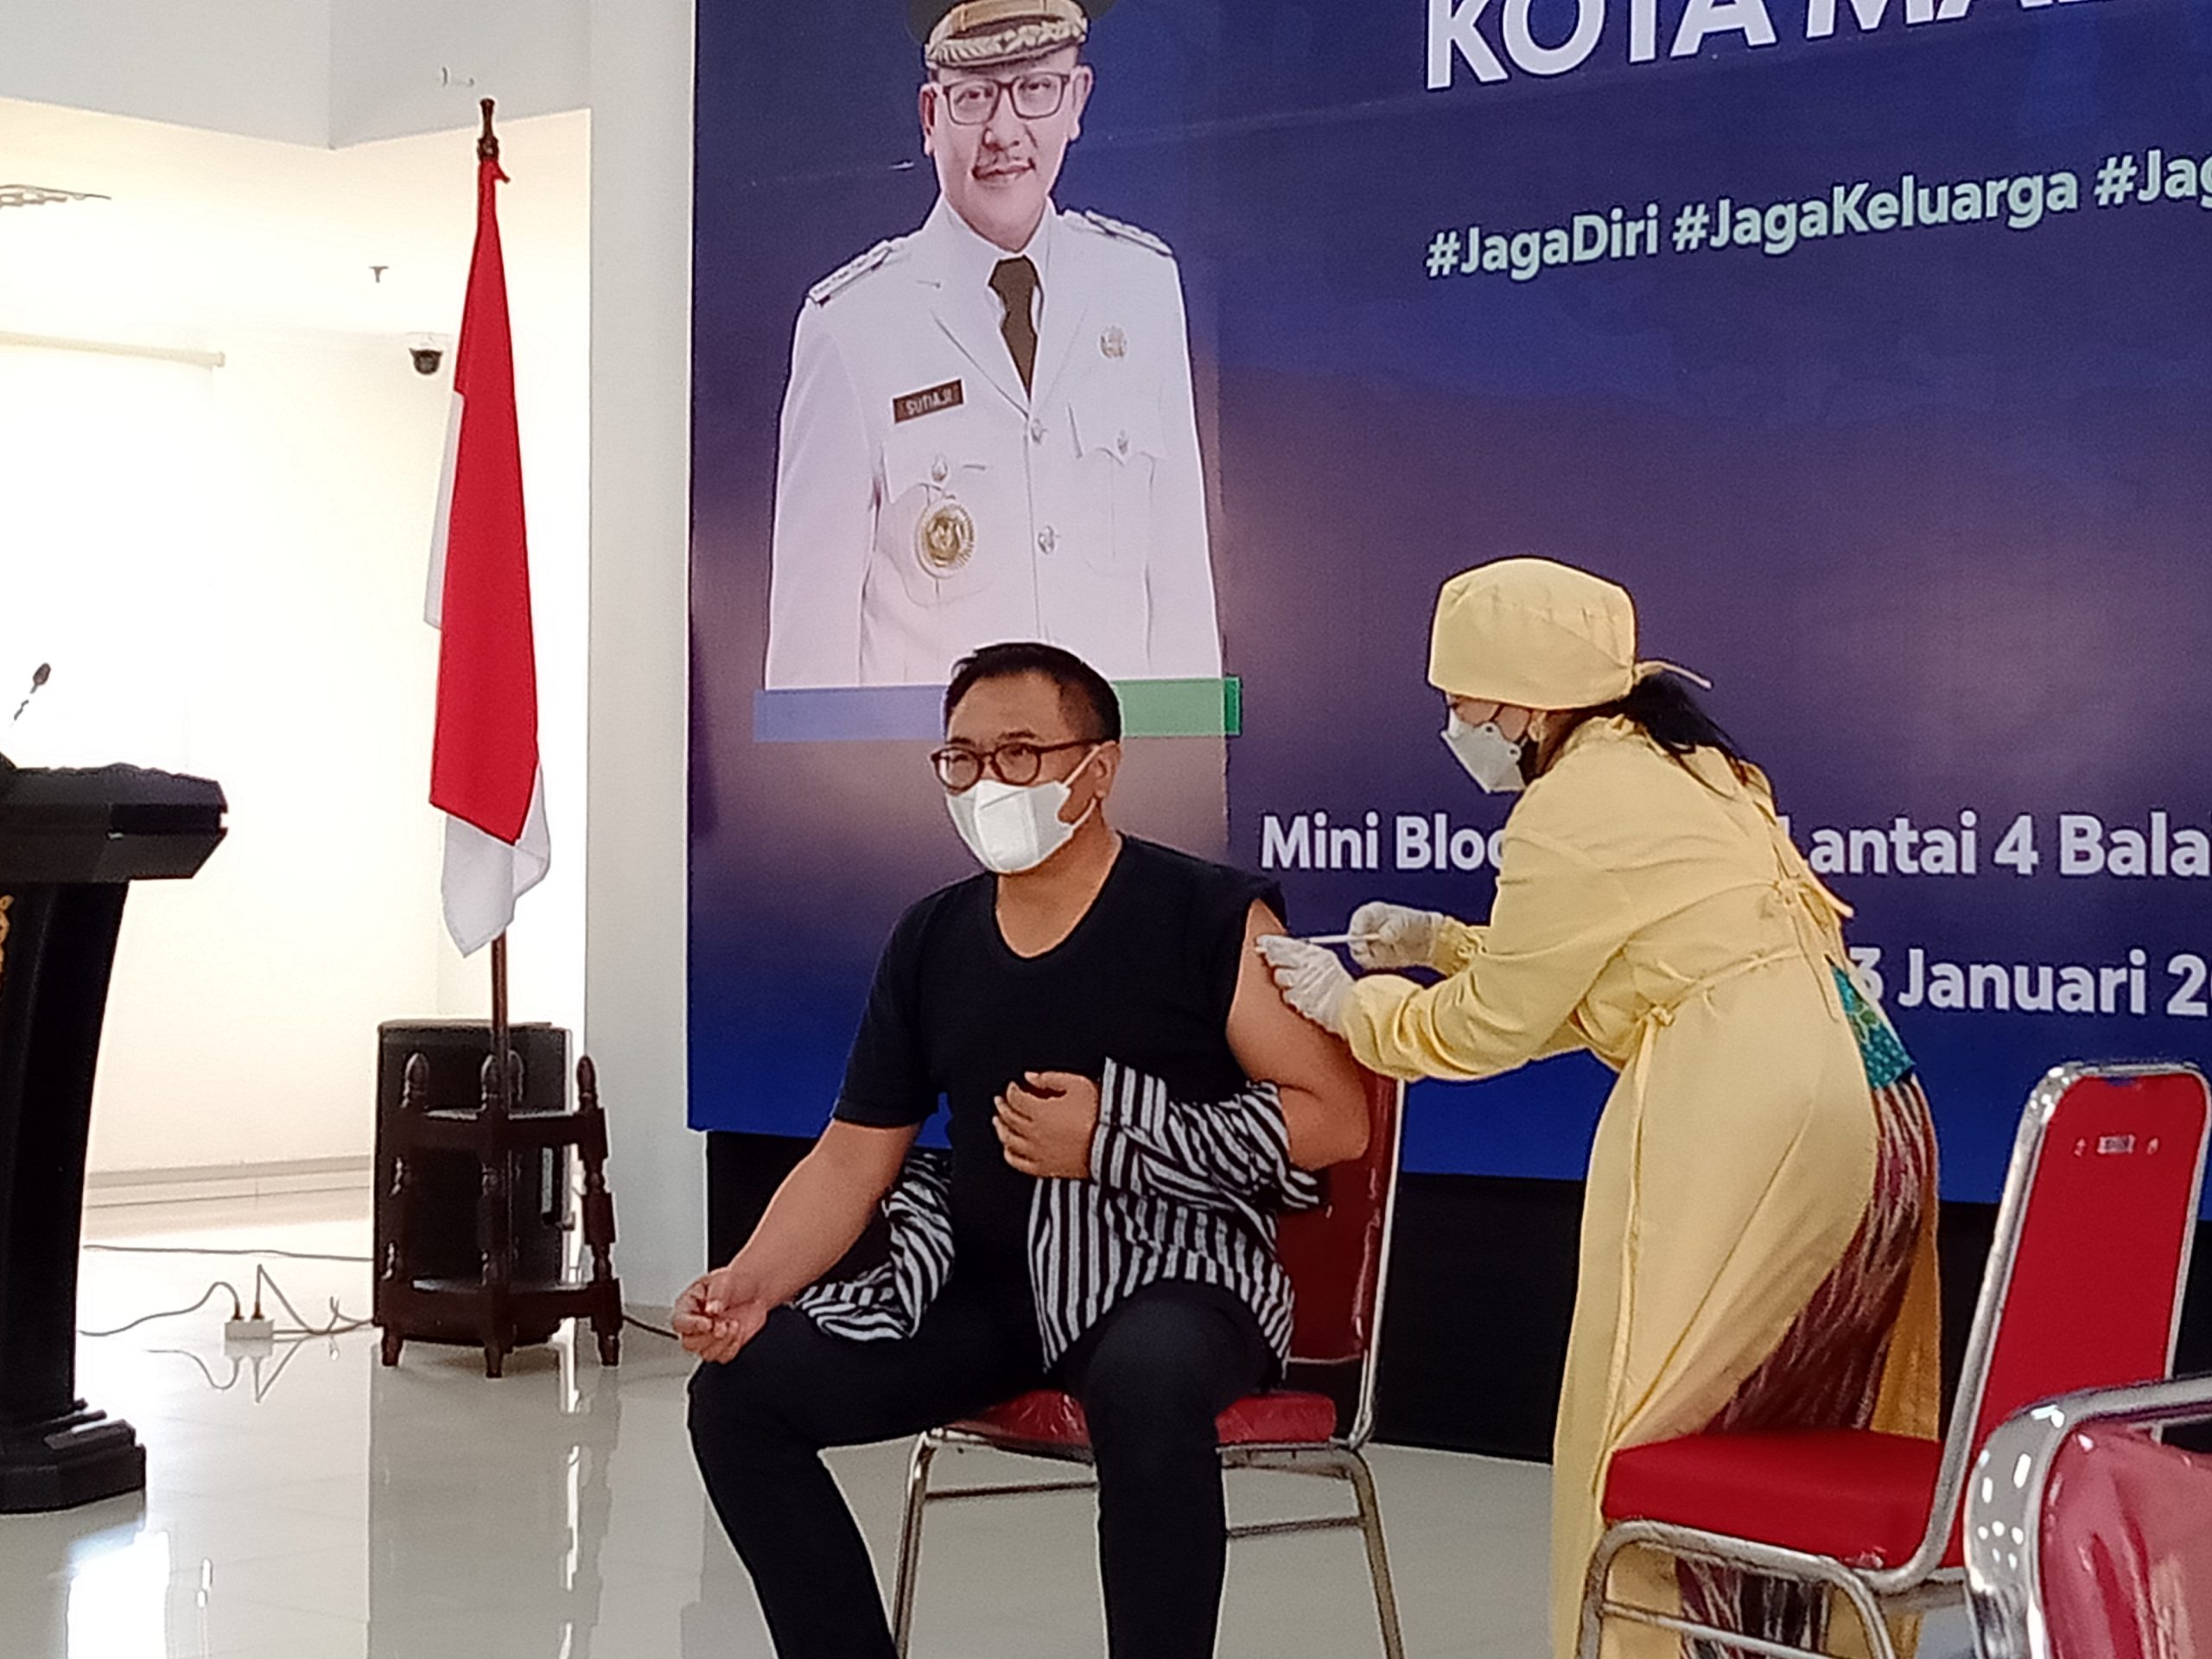 Mantan Pejabat Jadi Peserta Launching Vaksinasi Booster di Kota Malang